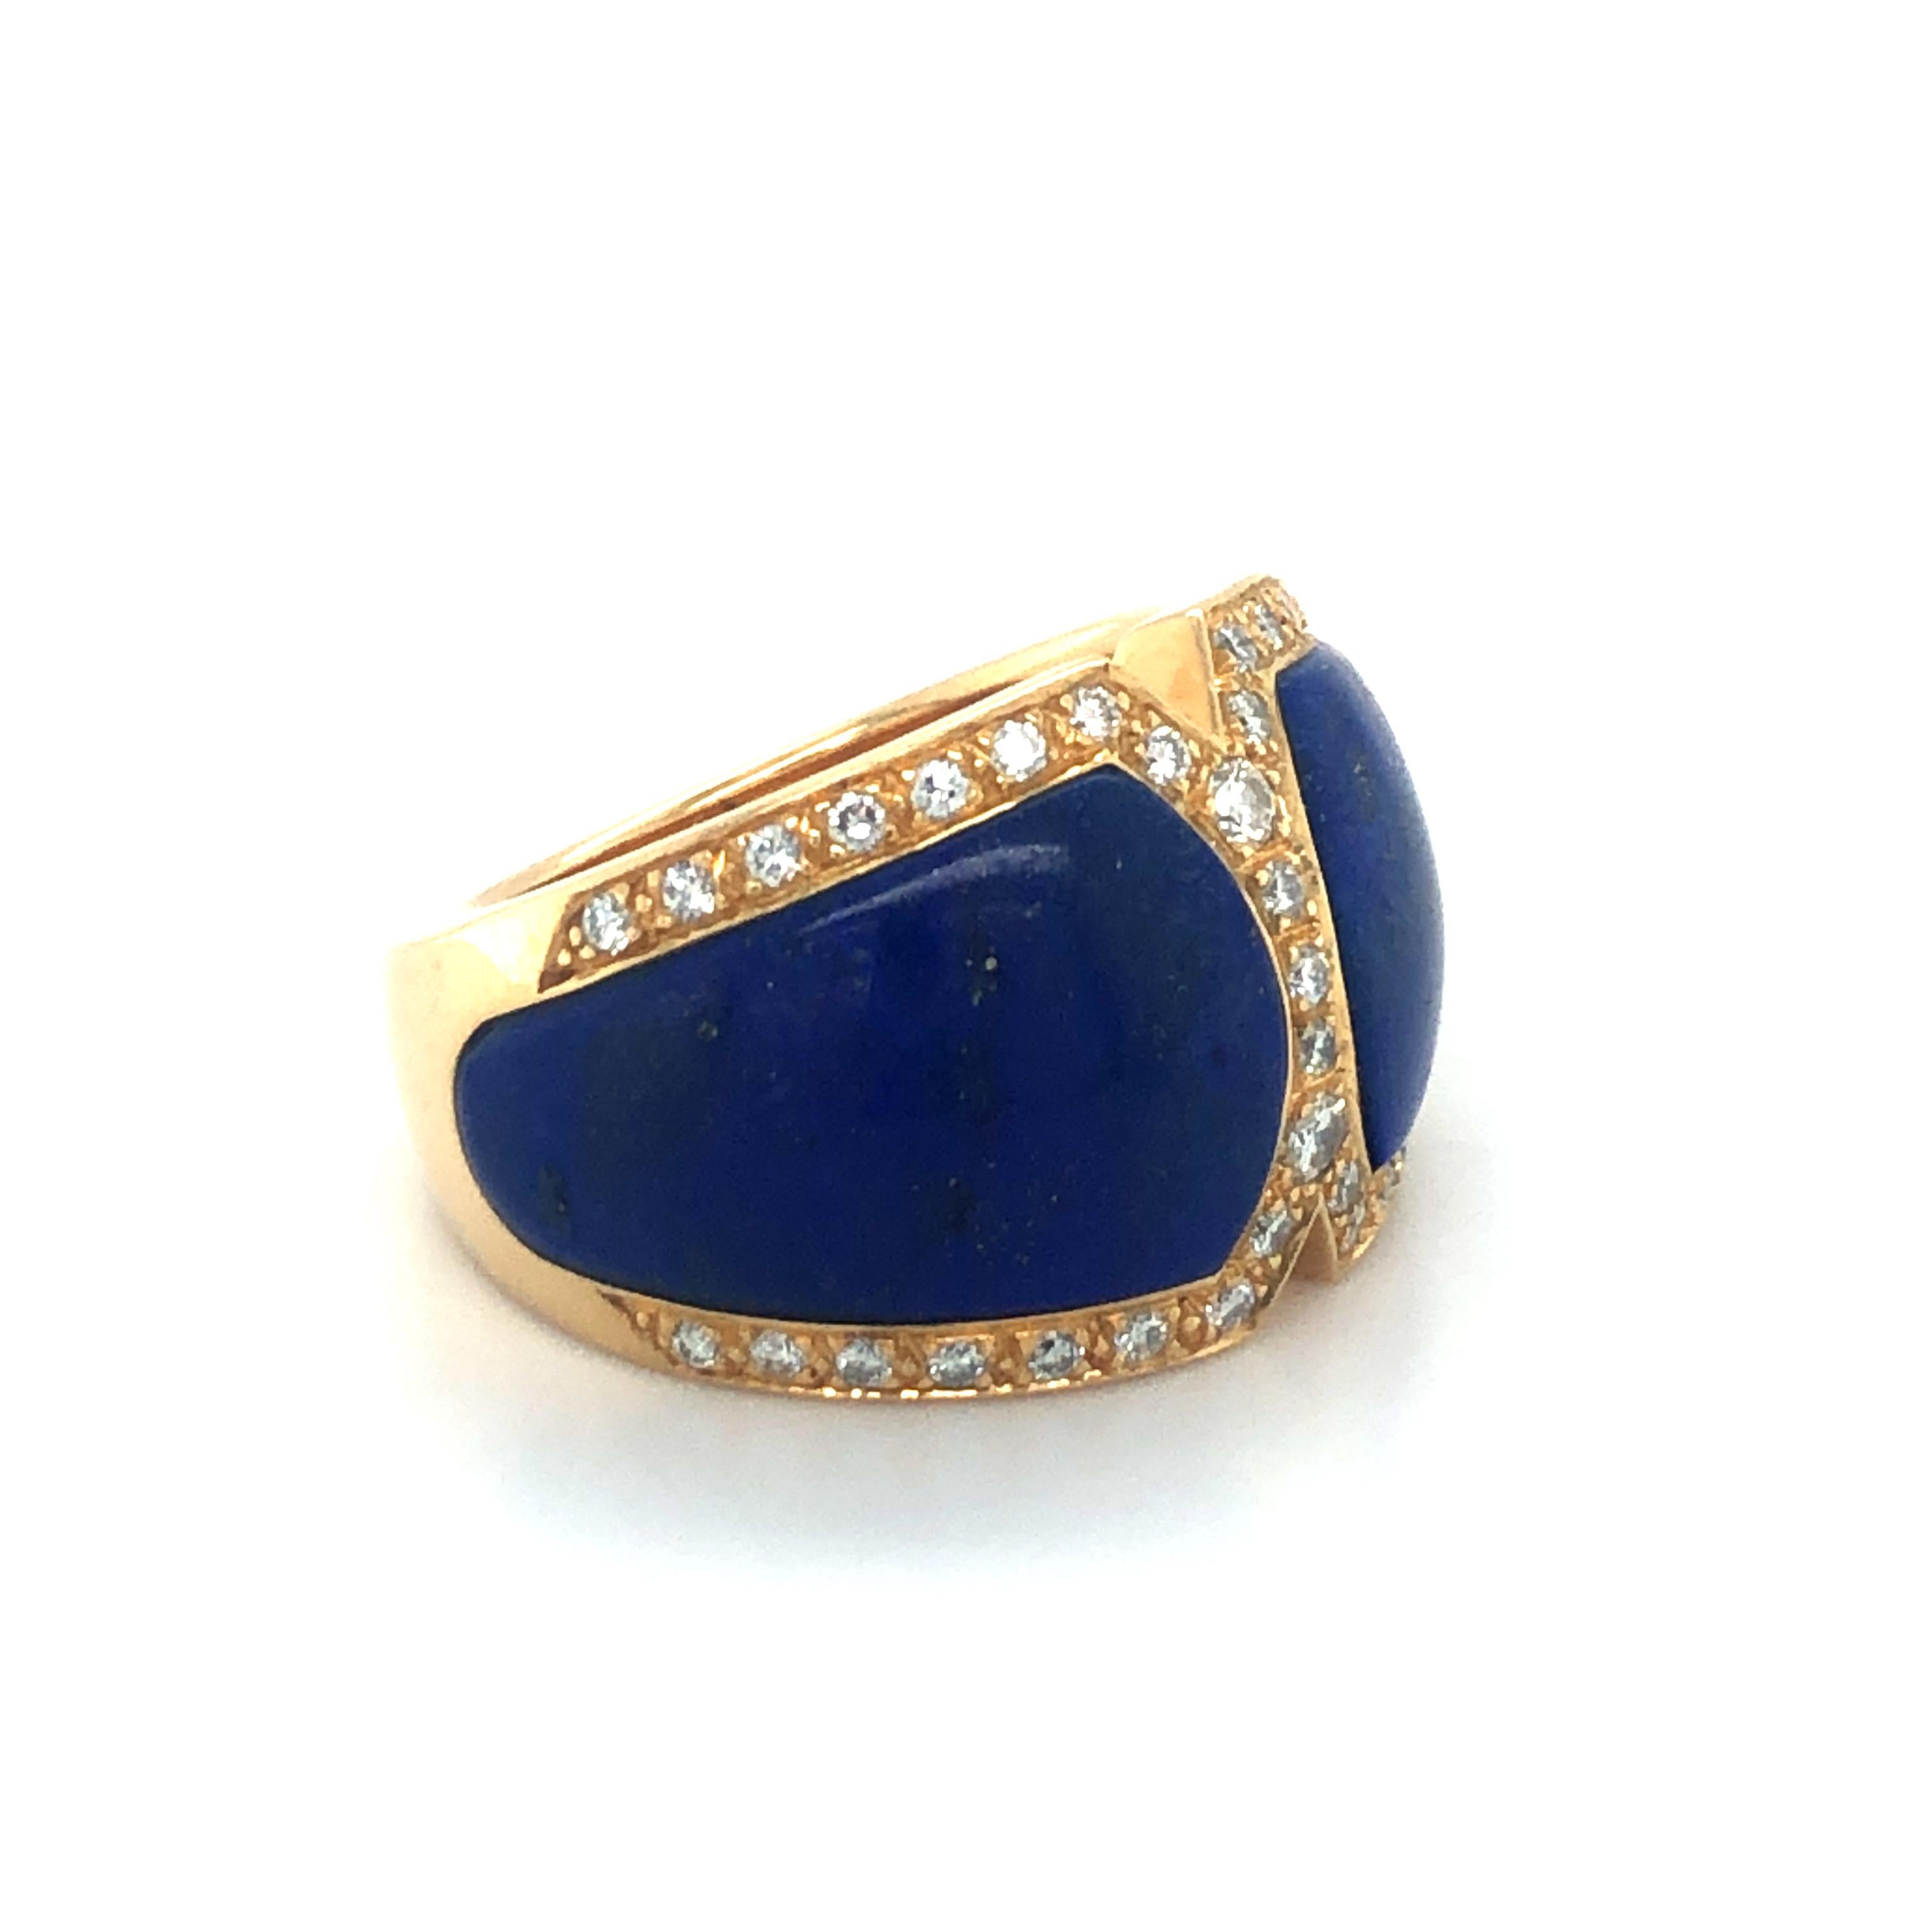 Contemporary Lapis Lazuli and Diamond Ring by Péclard in 18 Karat Yellow Gold